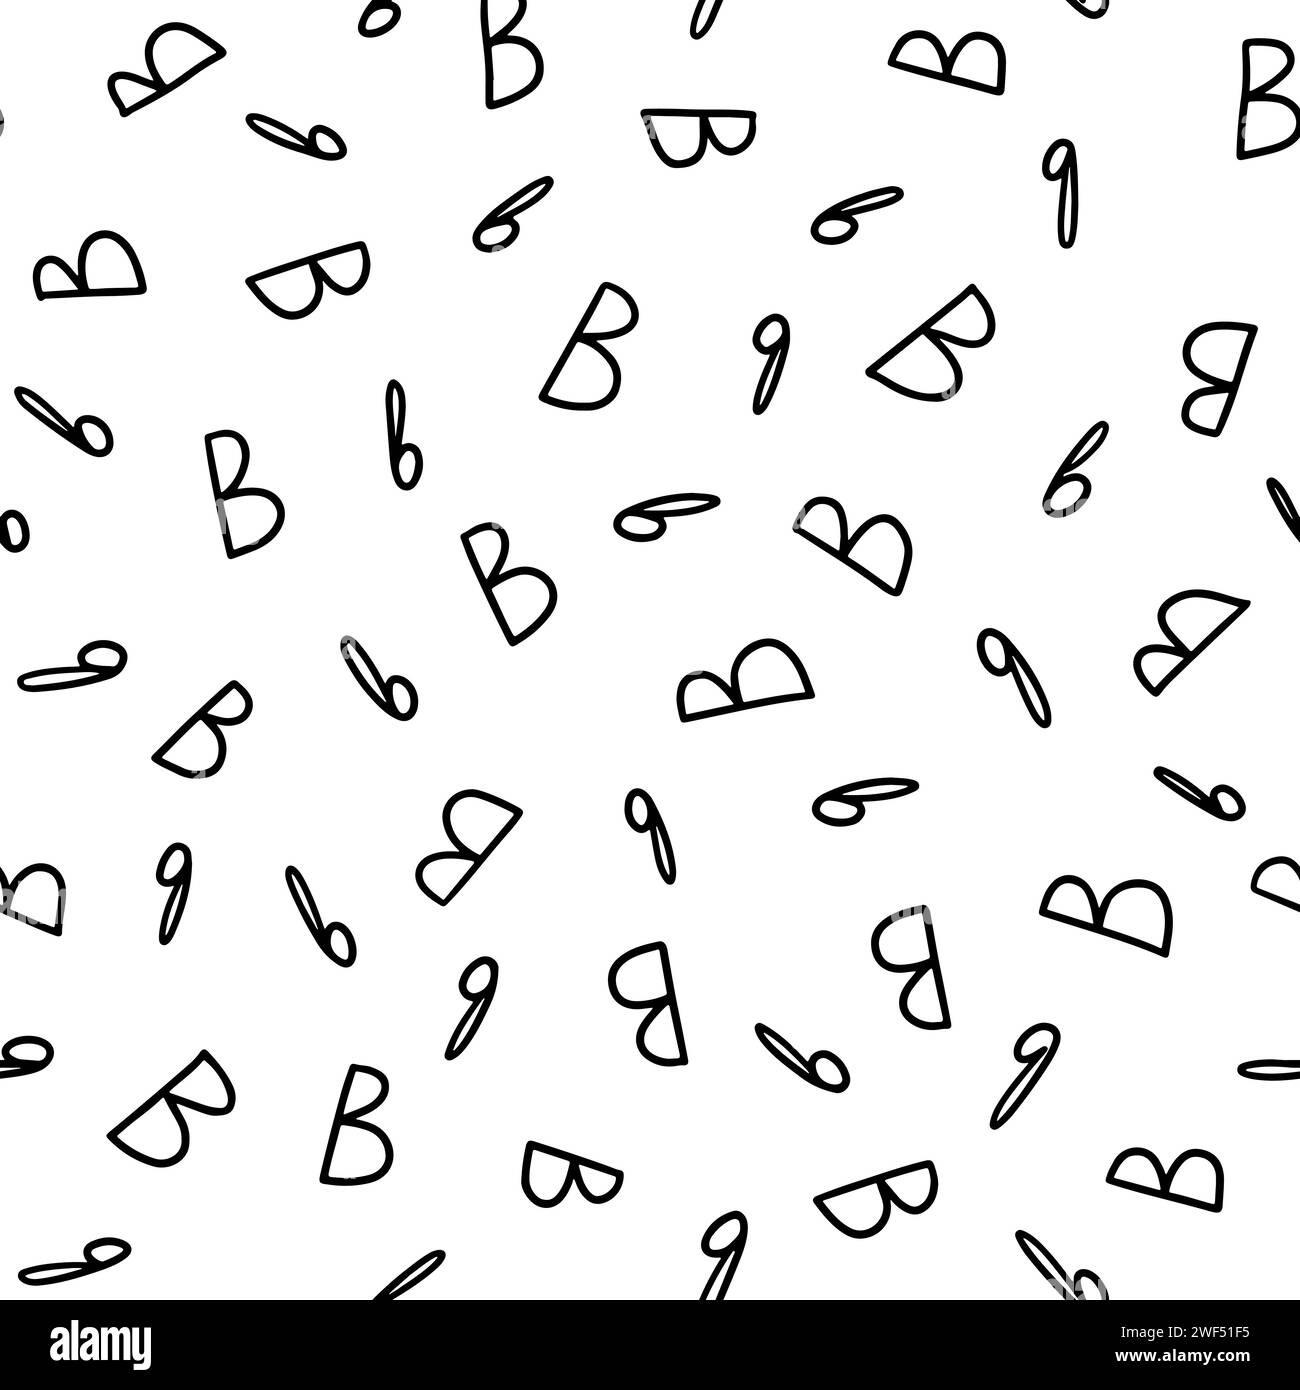 Black and white letter B seamless pattern, handwritten letters. Stock Vector